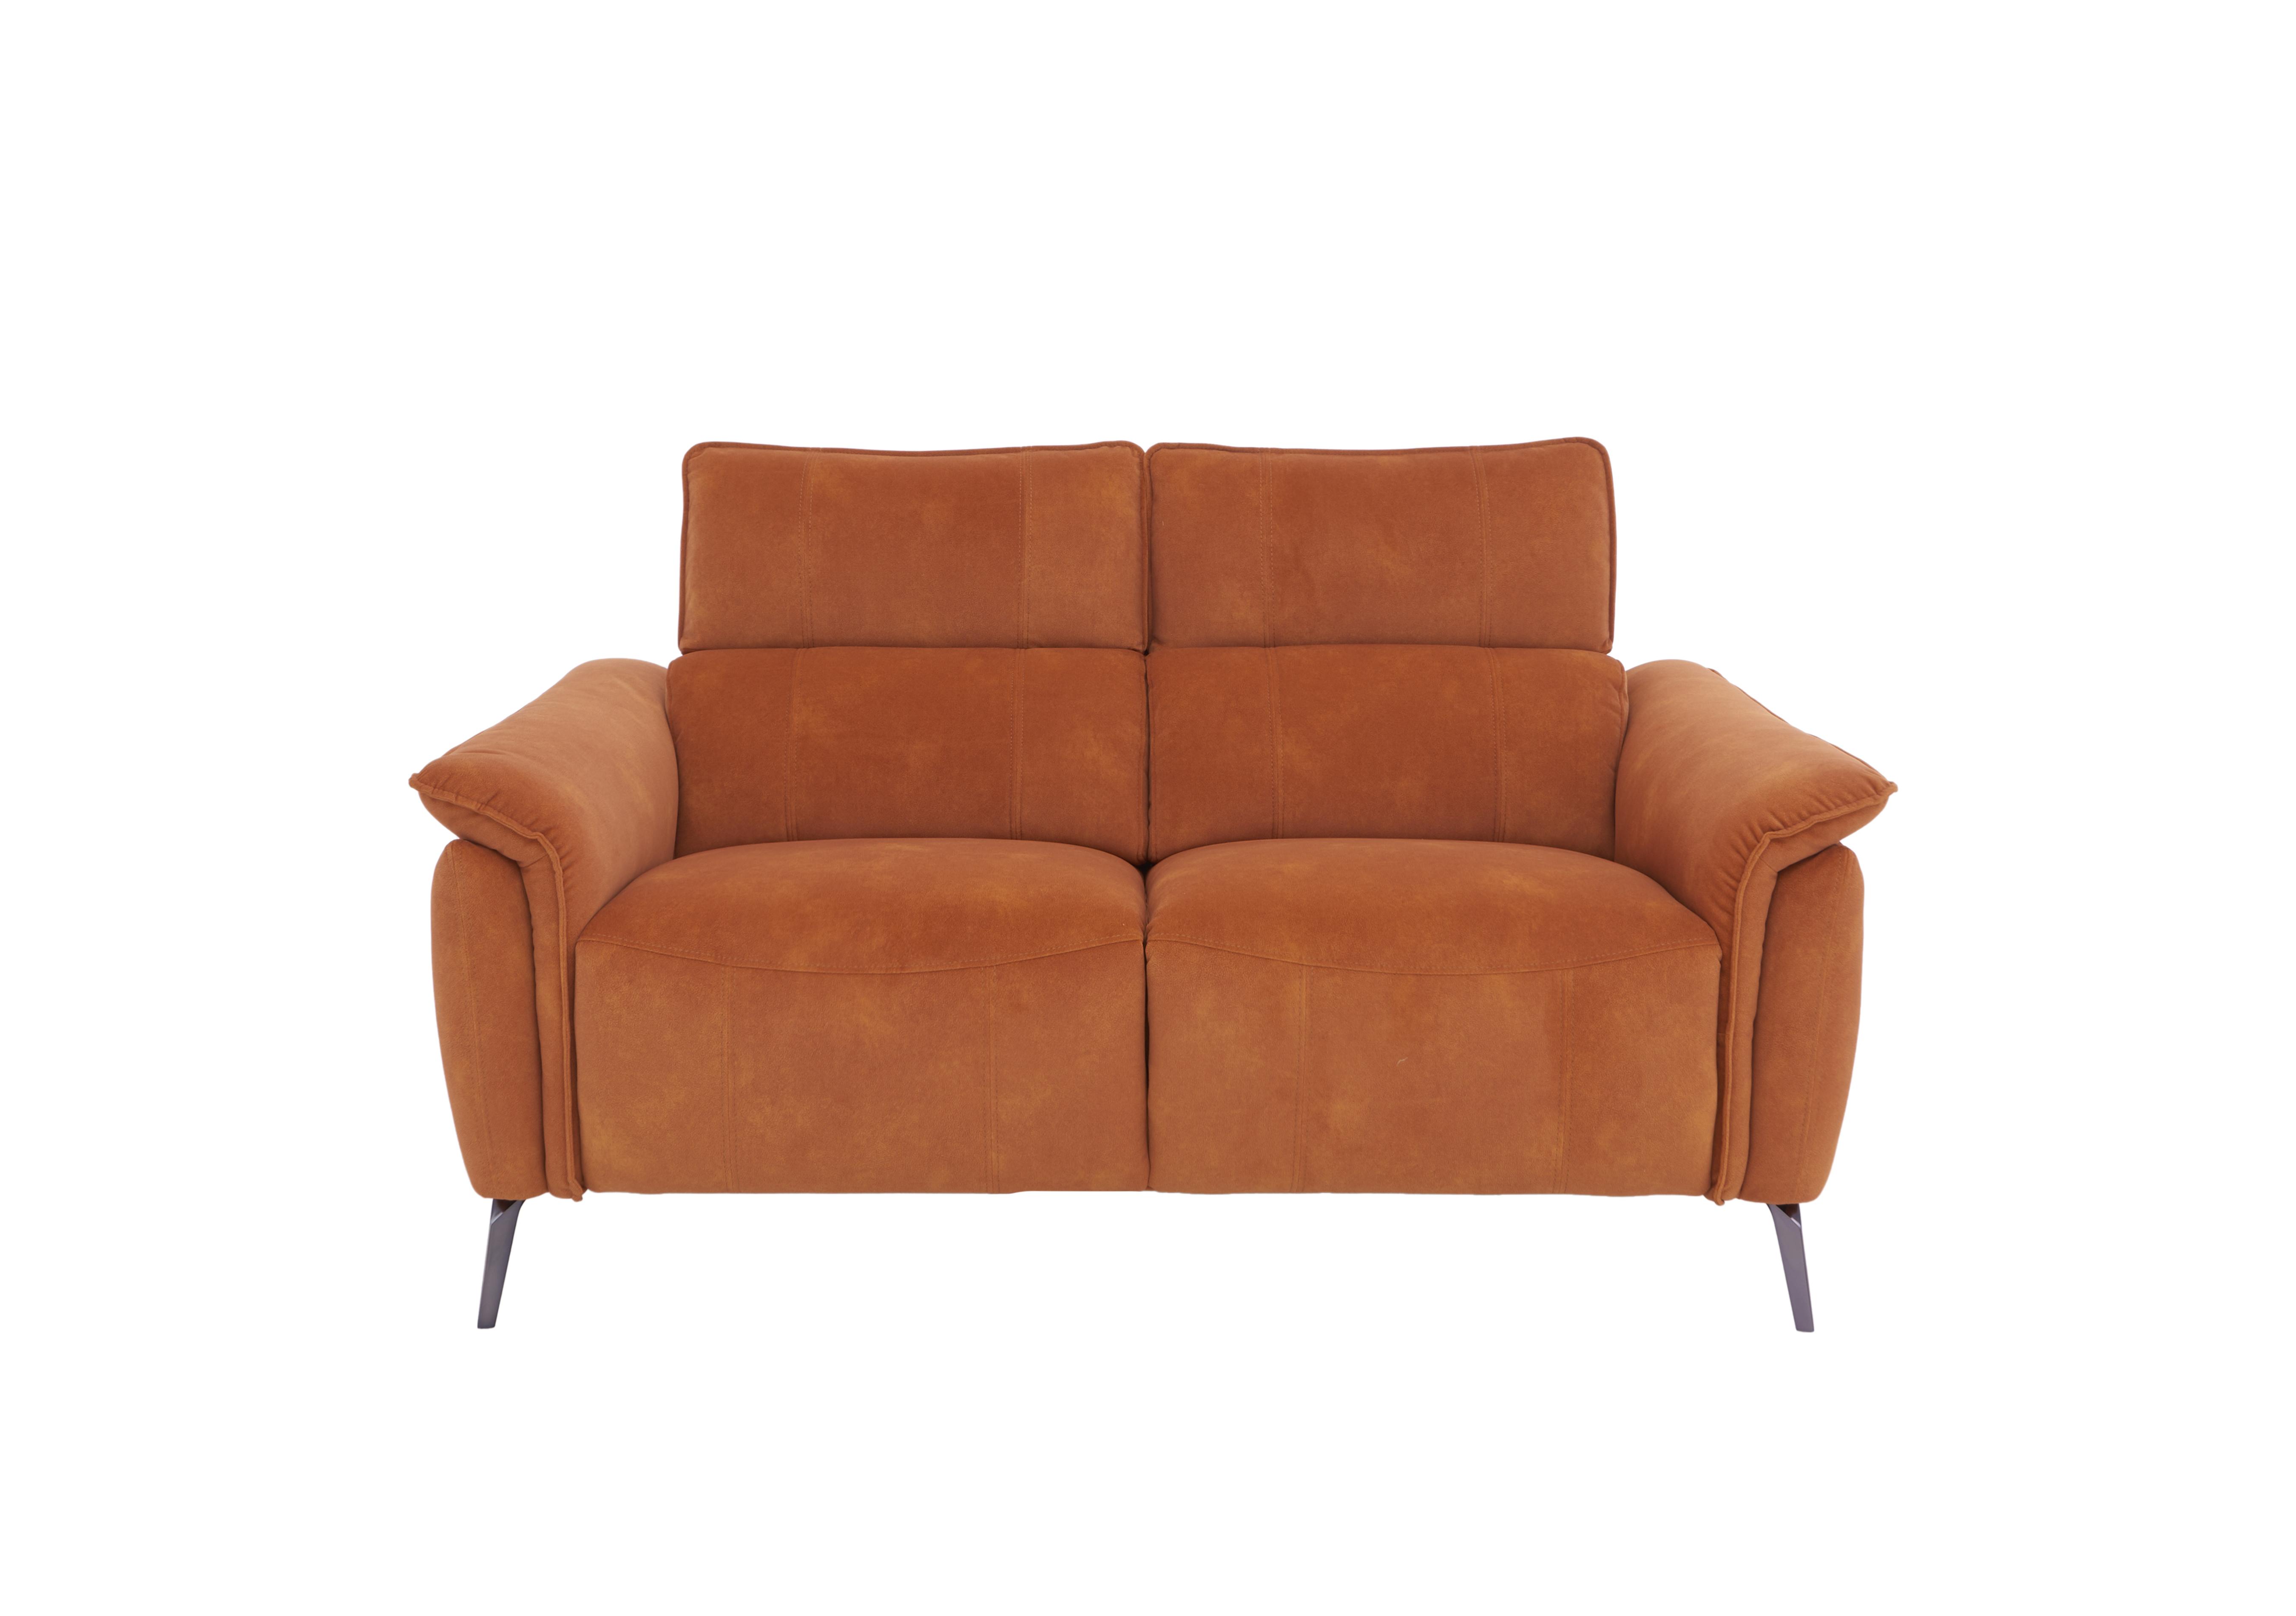 Jude 2 Seater Fabric Sofa in Pumpkin Dexter 09 43509 on Furniture Village